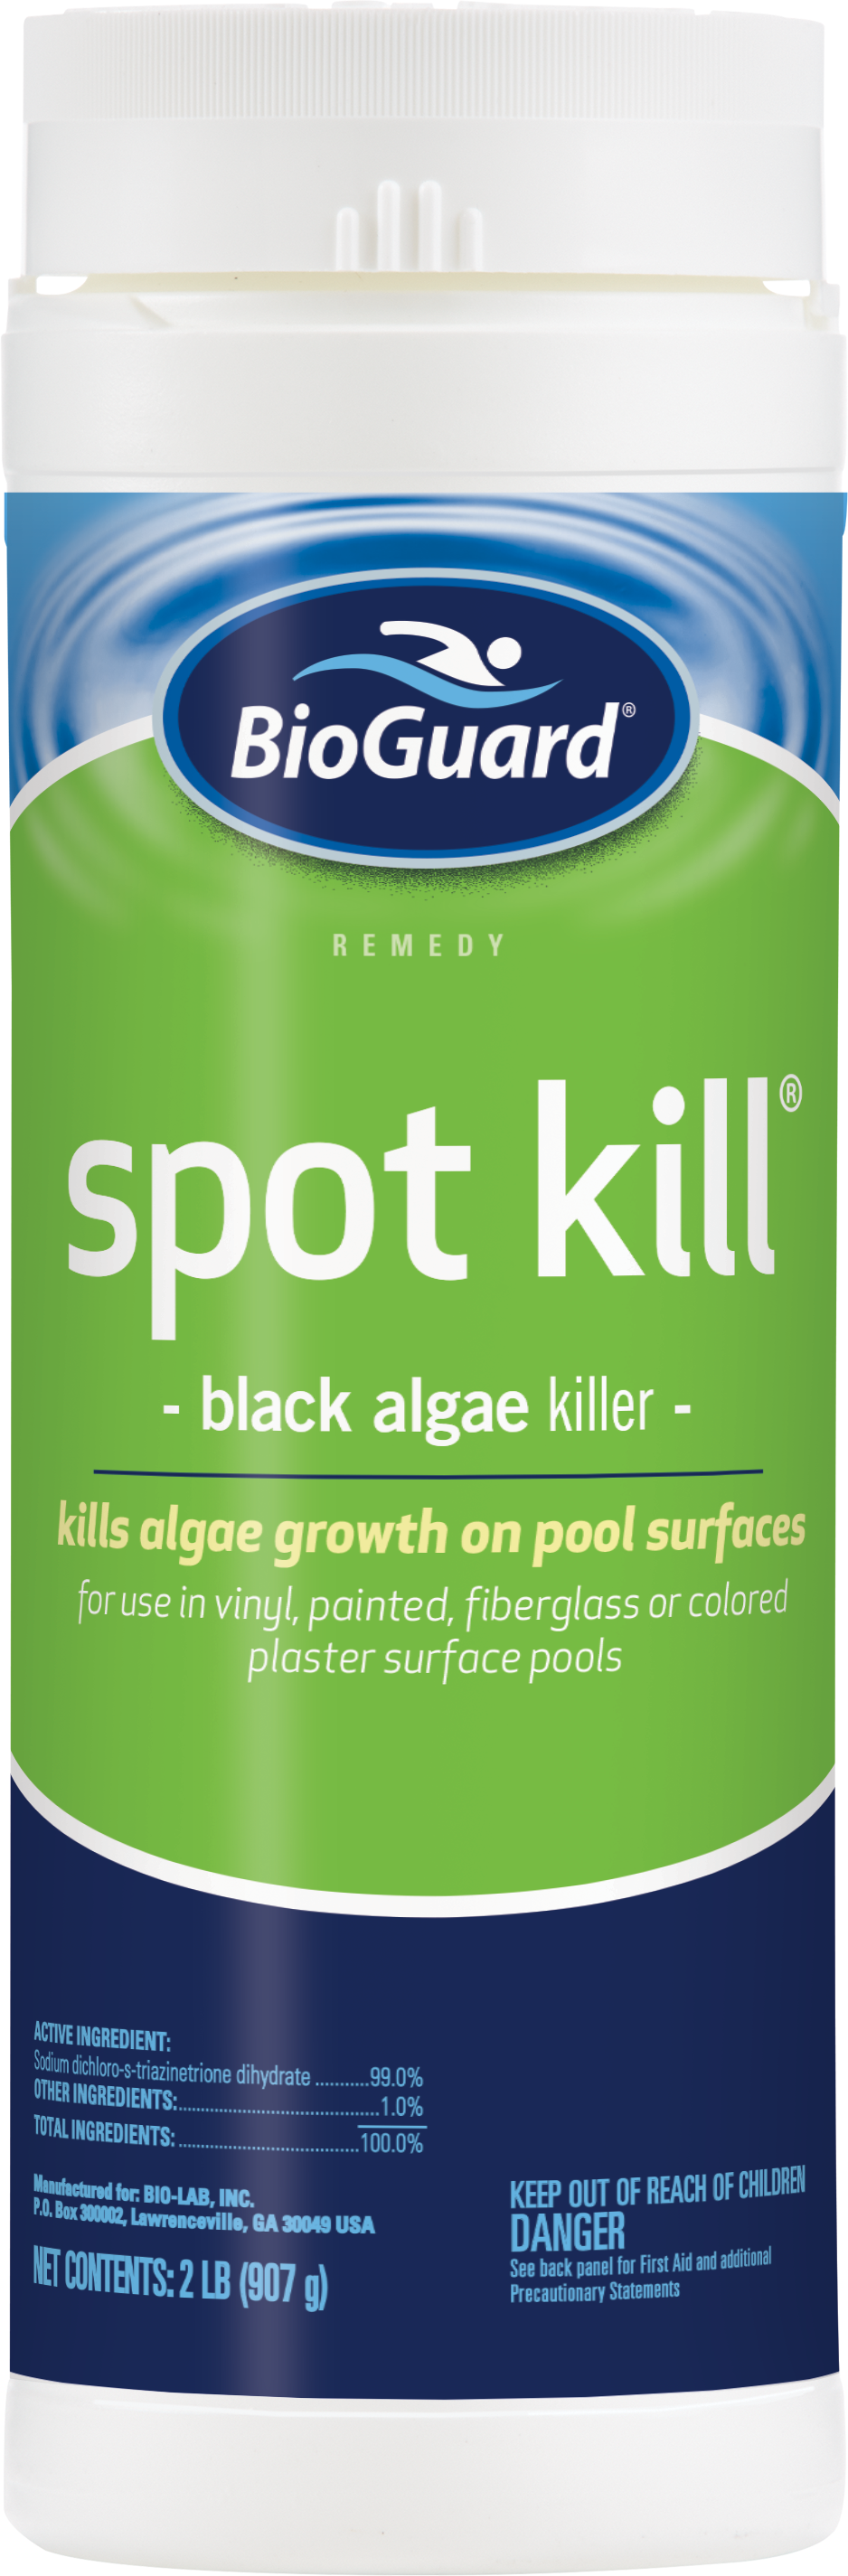 Spot Kill 2lb. Black Algae Killer